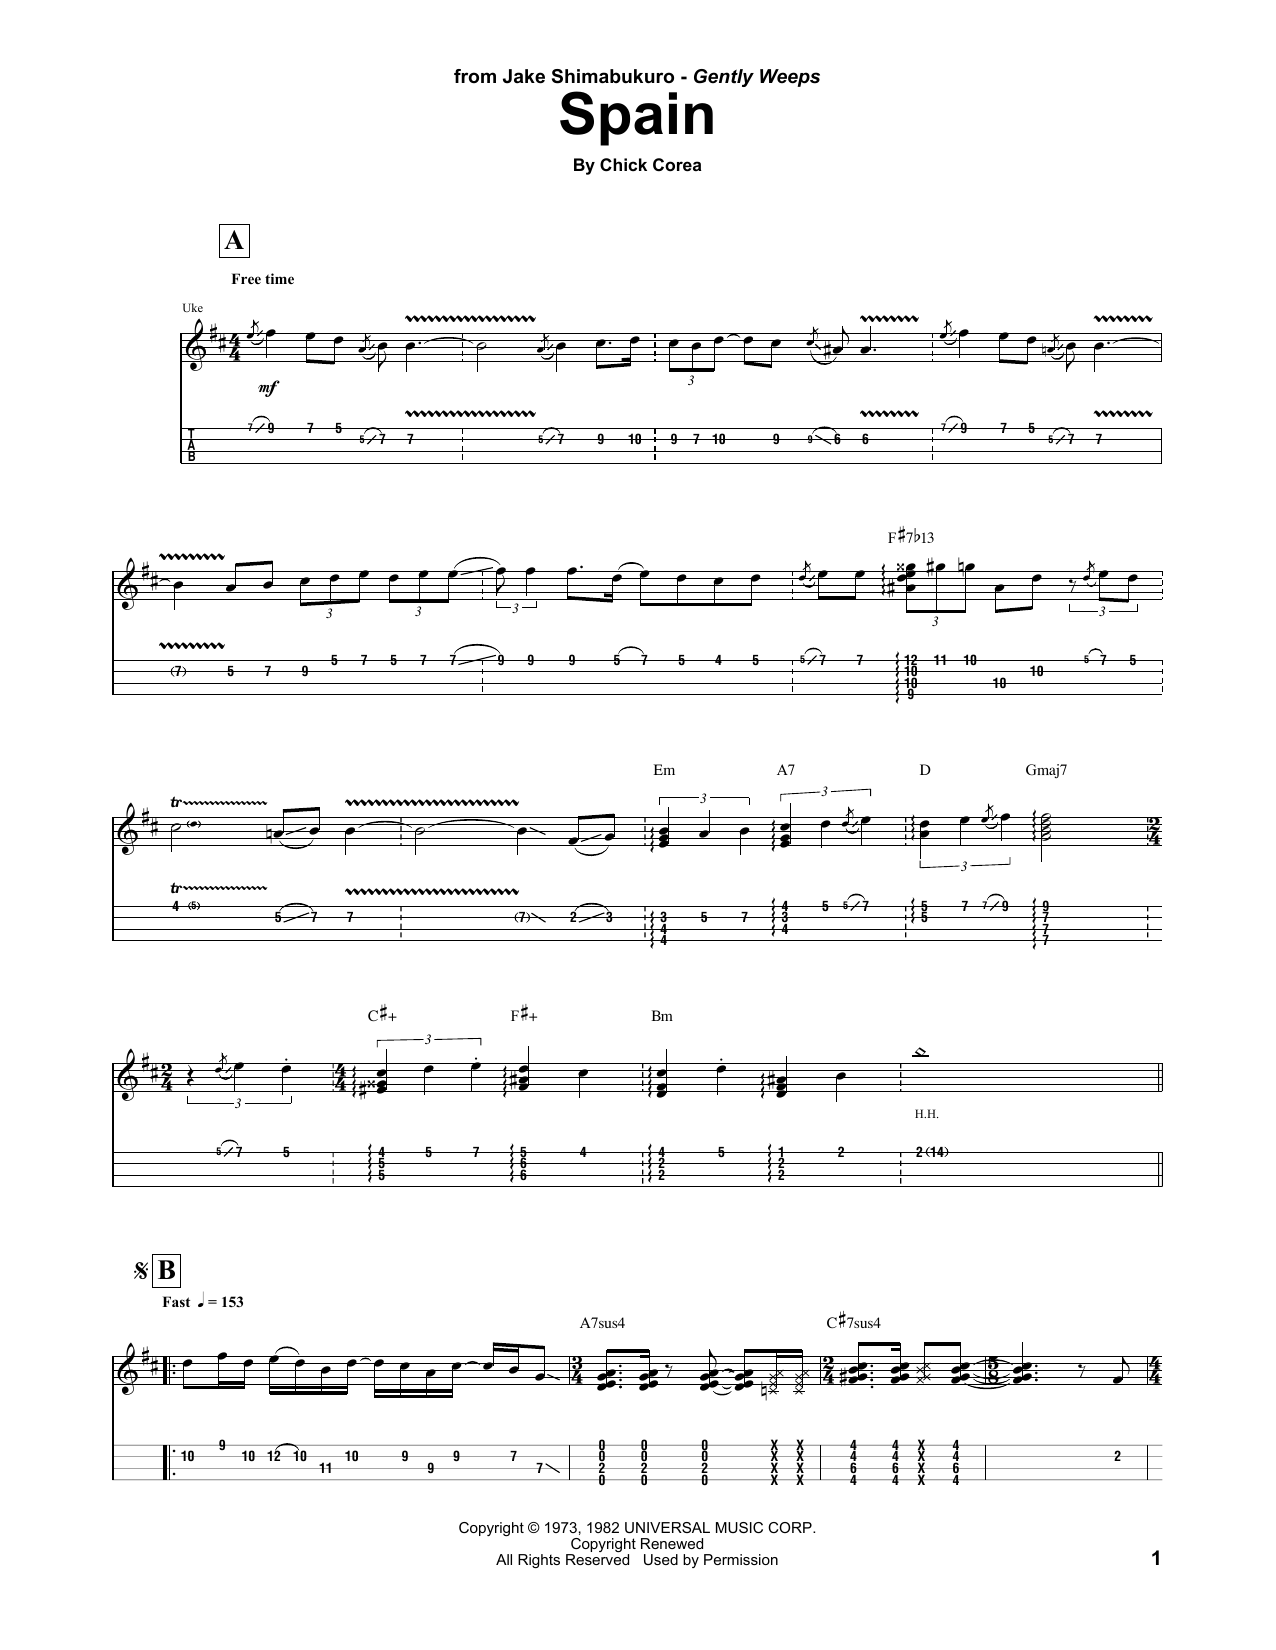 Chick Corea Spain Sheet Music Notes & Chords for UKETAB - Download or Print PDF